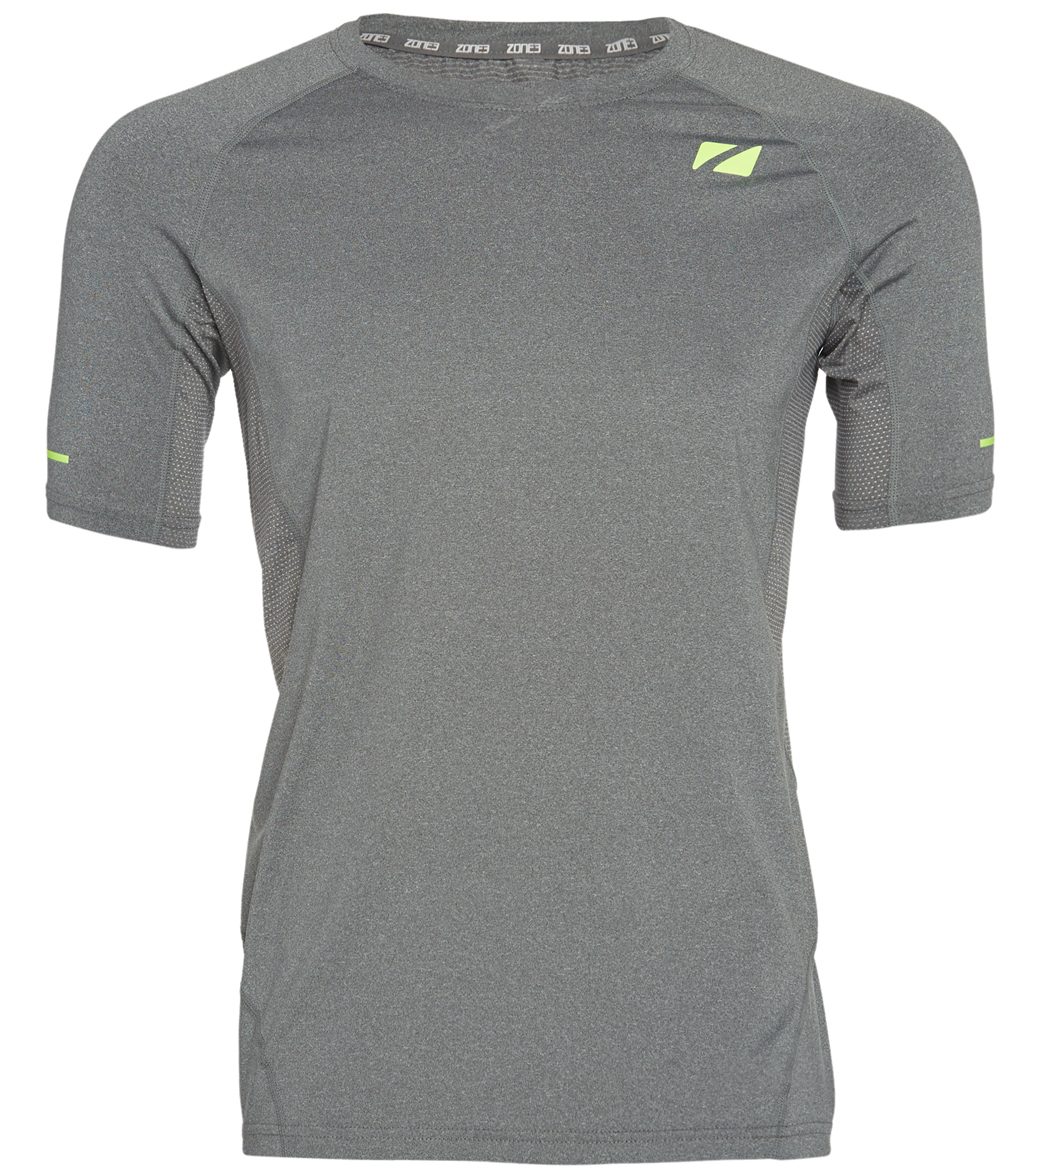 Zone3 Men's Compression Power Burst Short Sleeve Shirt - Grey Spec/Neon Yellow Medium - Swimoutlet.com